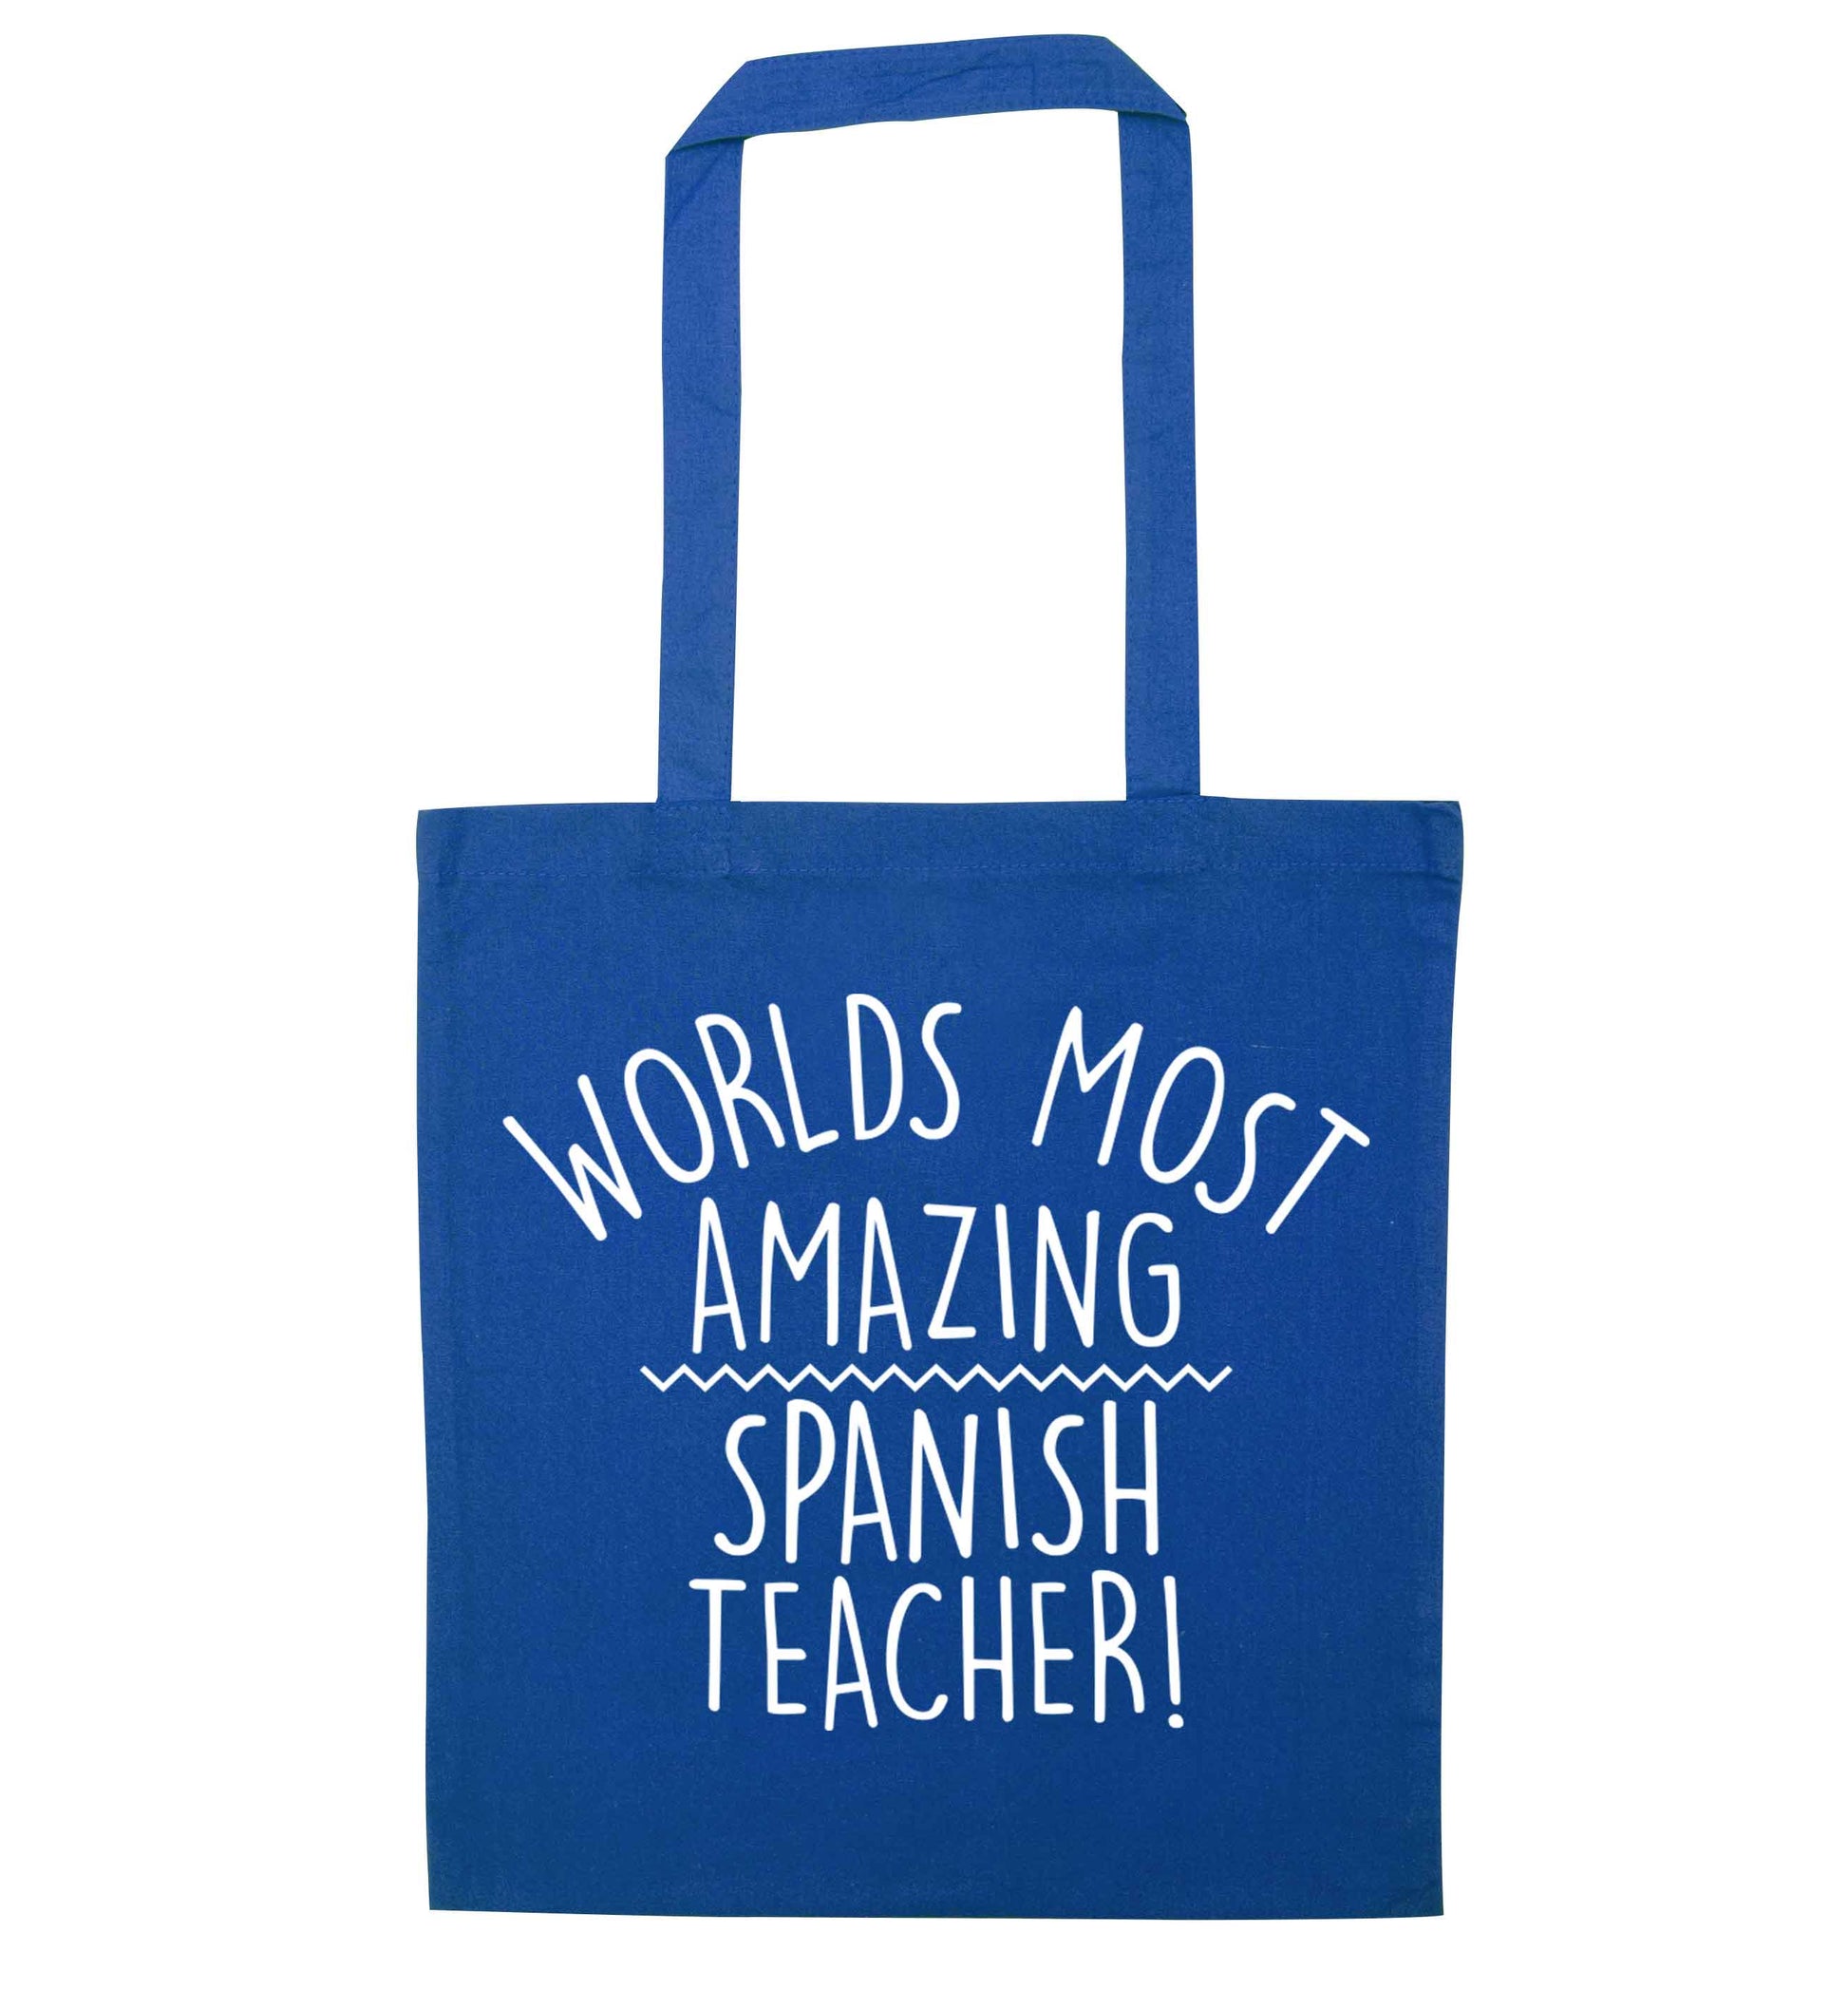 Worlds most amazing Spanish teacher blue tote bag